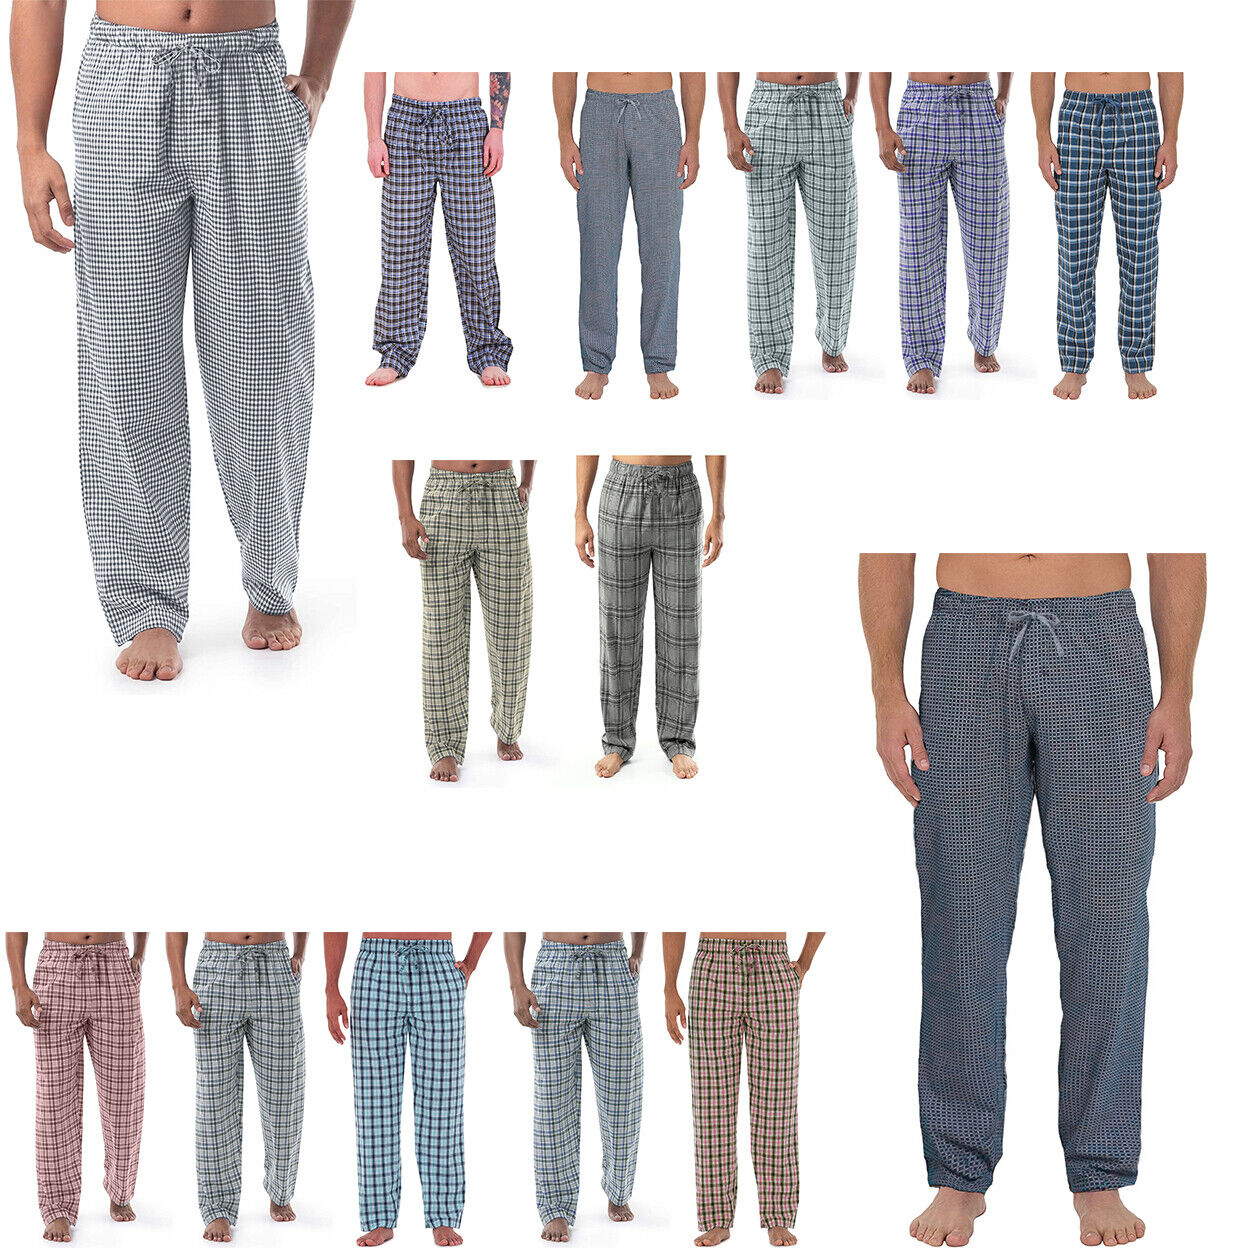 5-Pack: Men's Ultra-Soft Plaid Cotton Jersey Knit Comfy Sleep Lounge Pajama Pants - X-large